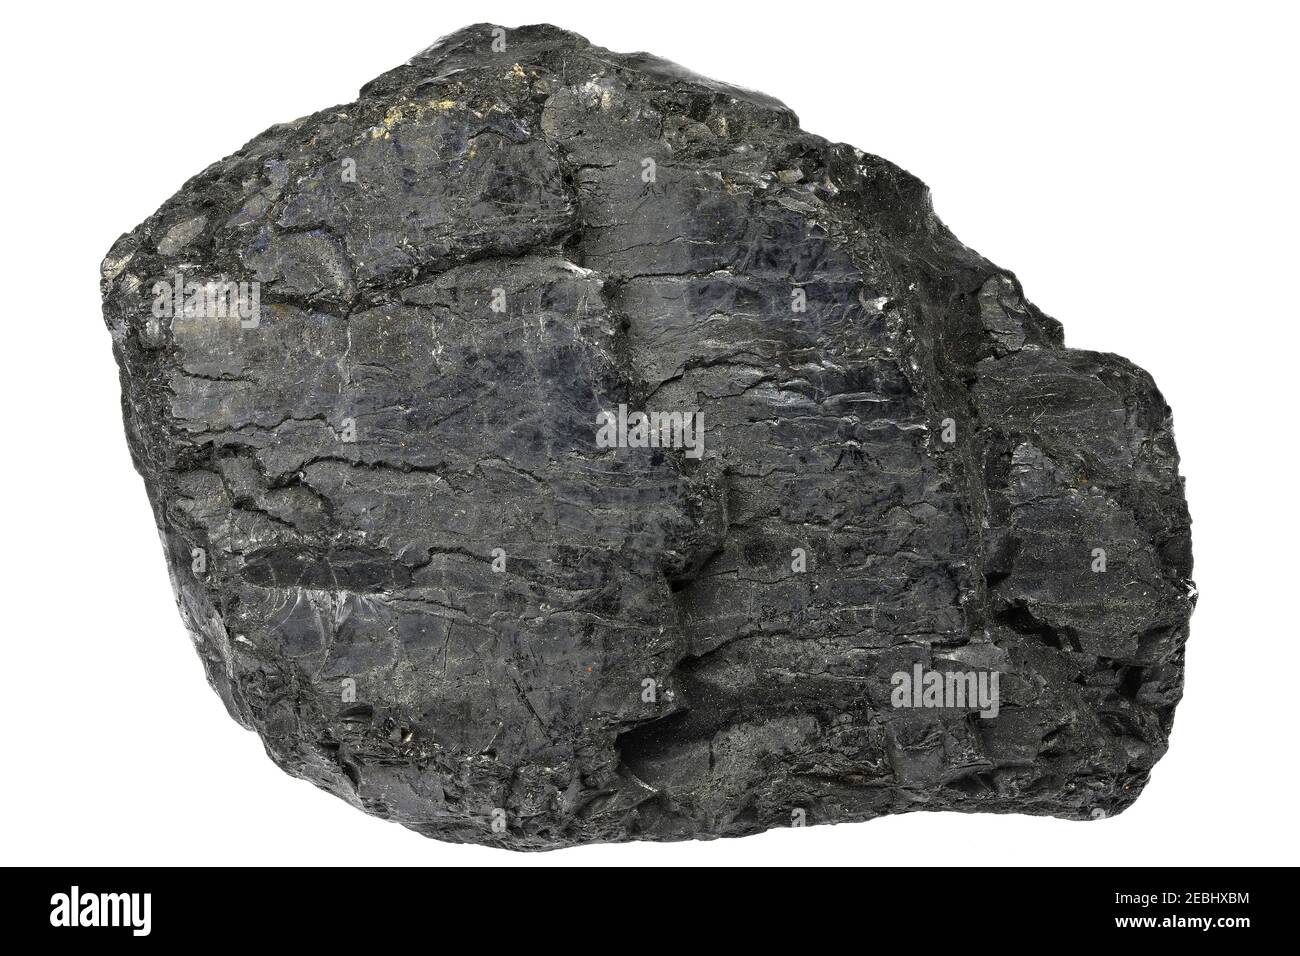 Carbón de antracita de Ibbenburen, Alemania aislado sobre fondo blanco Foto de stock